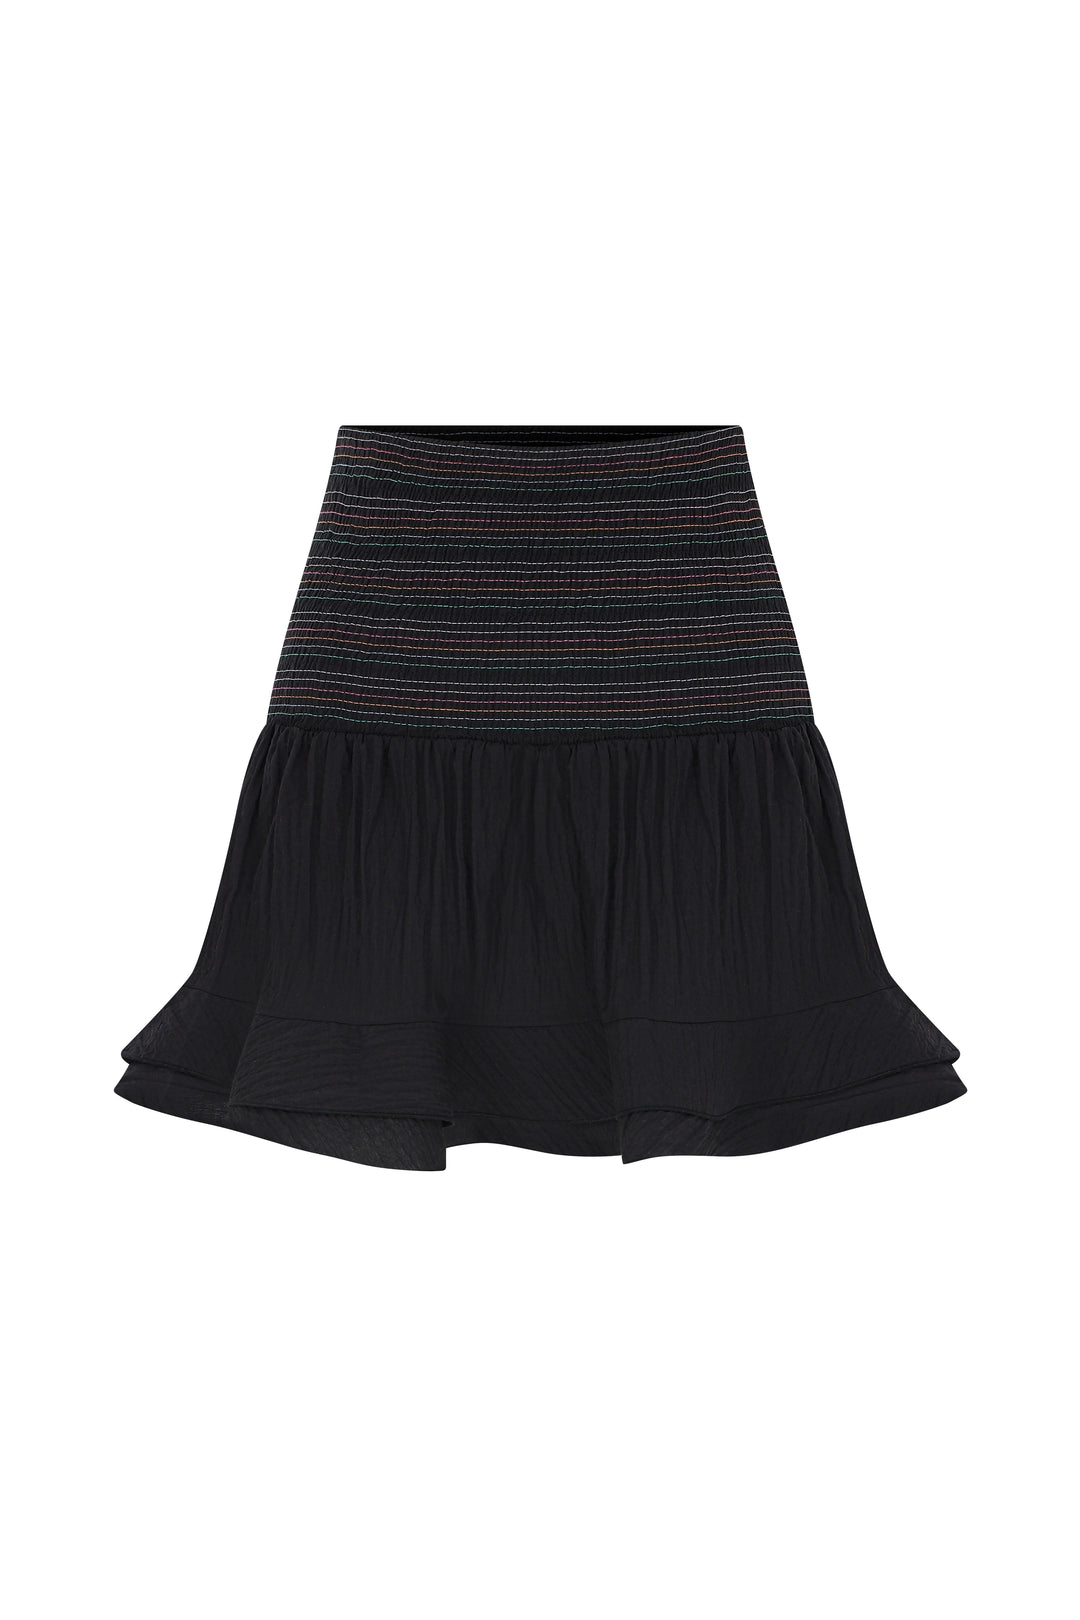 Kai - 'Lampshade' Elasticated Black Mini Skirt